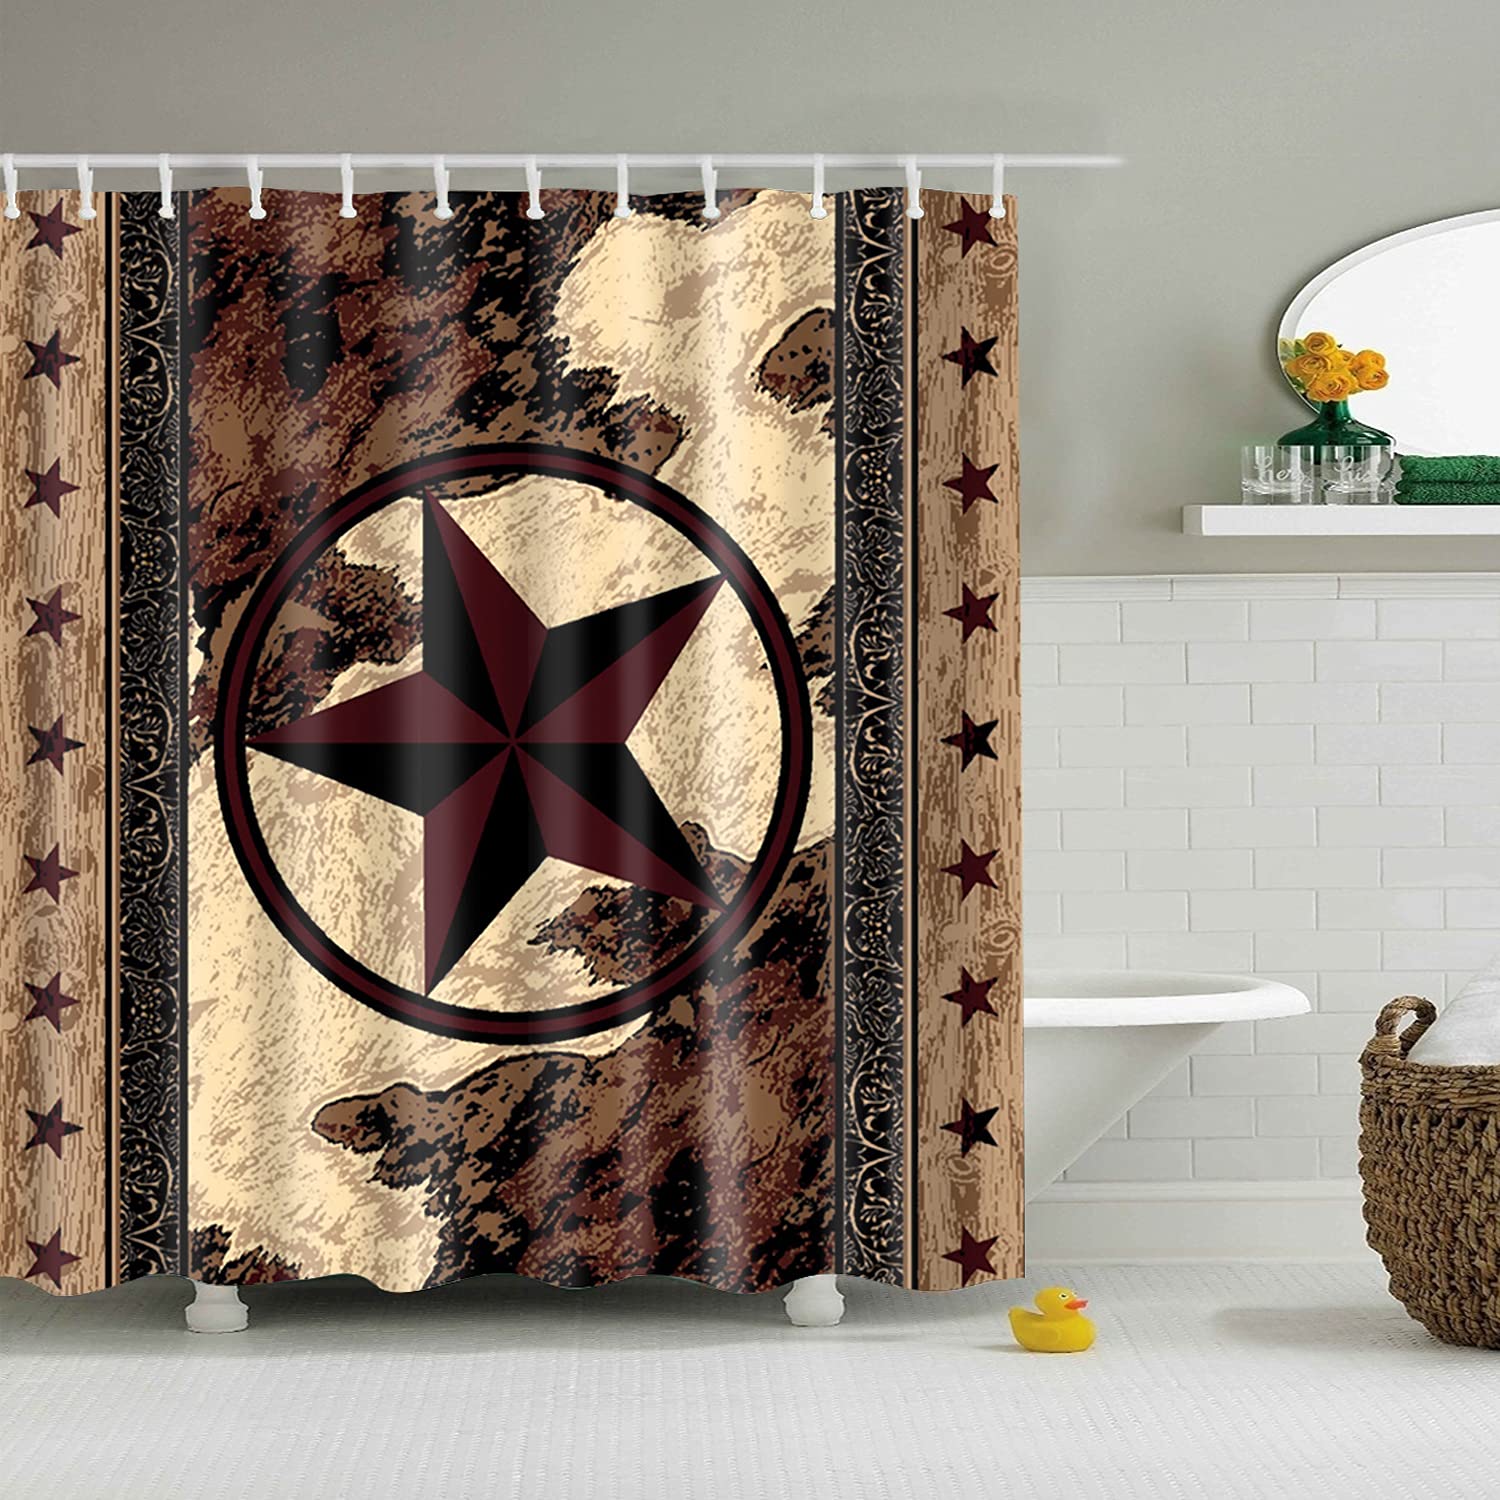 Book Cover Western Texas Star Bathroom Shower Curtain with 12 Hooks Decor Art Prints Waterproof Polyester (Western Texas Star) Western Texas Star 71